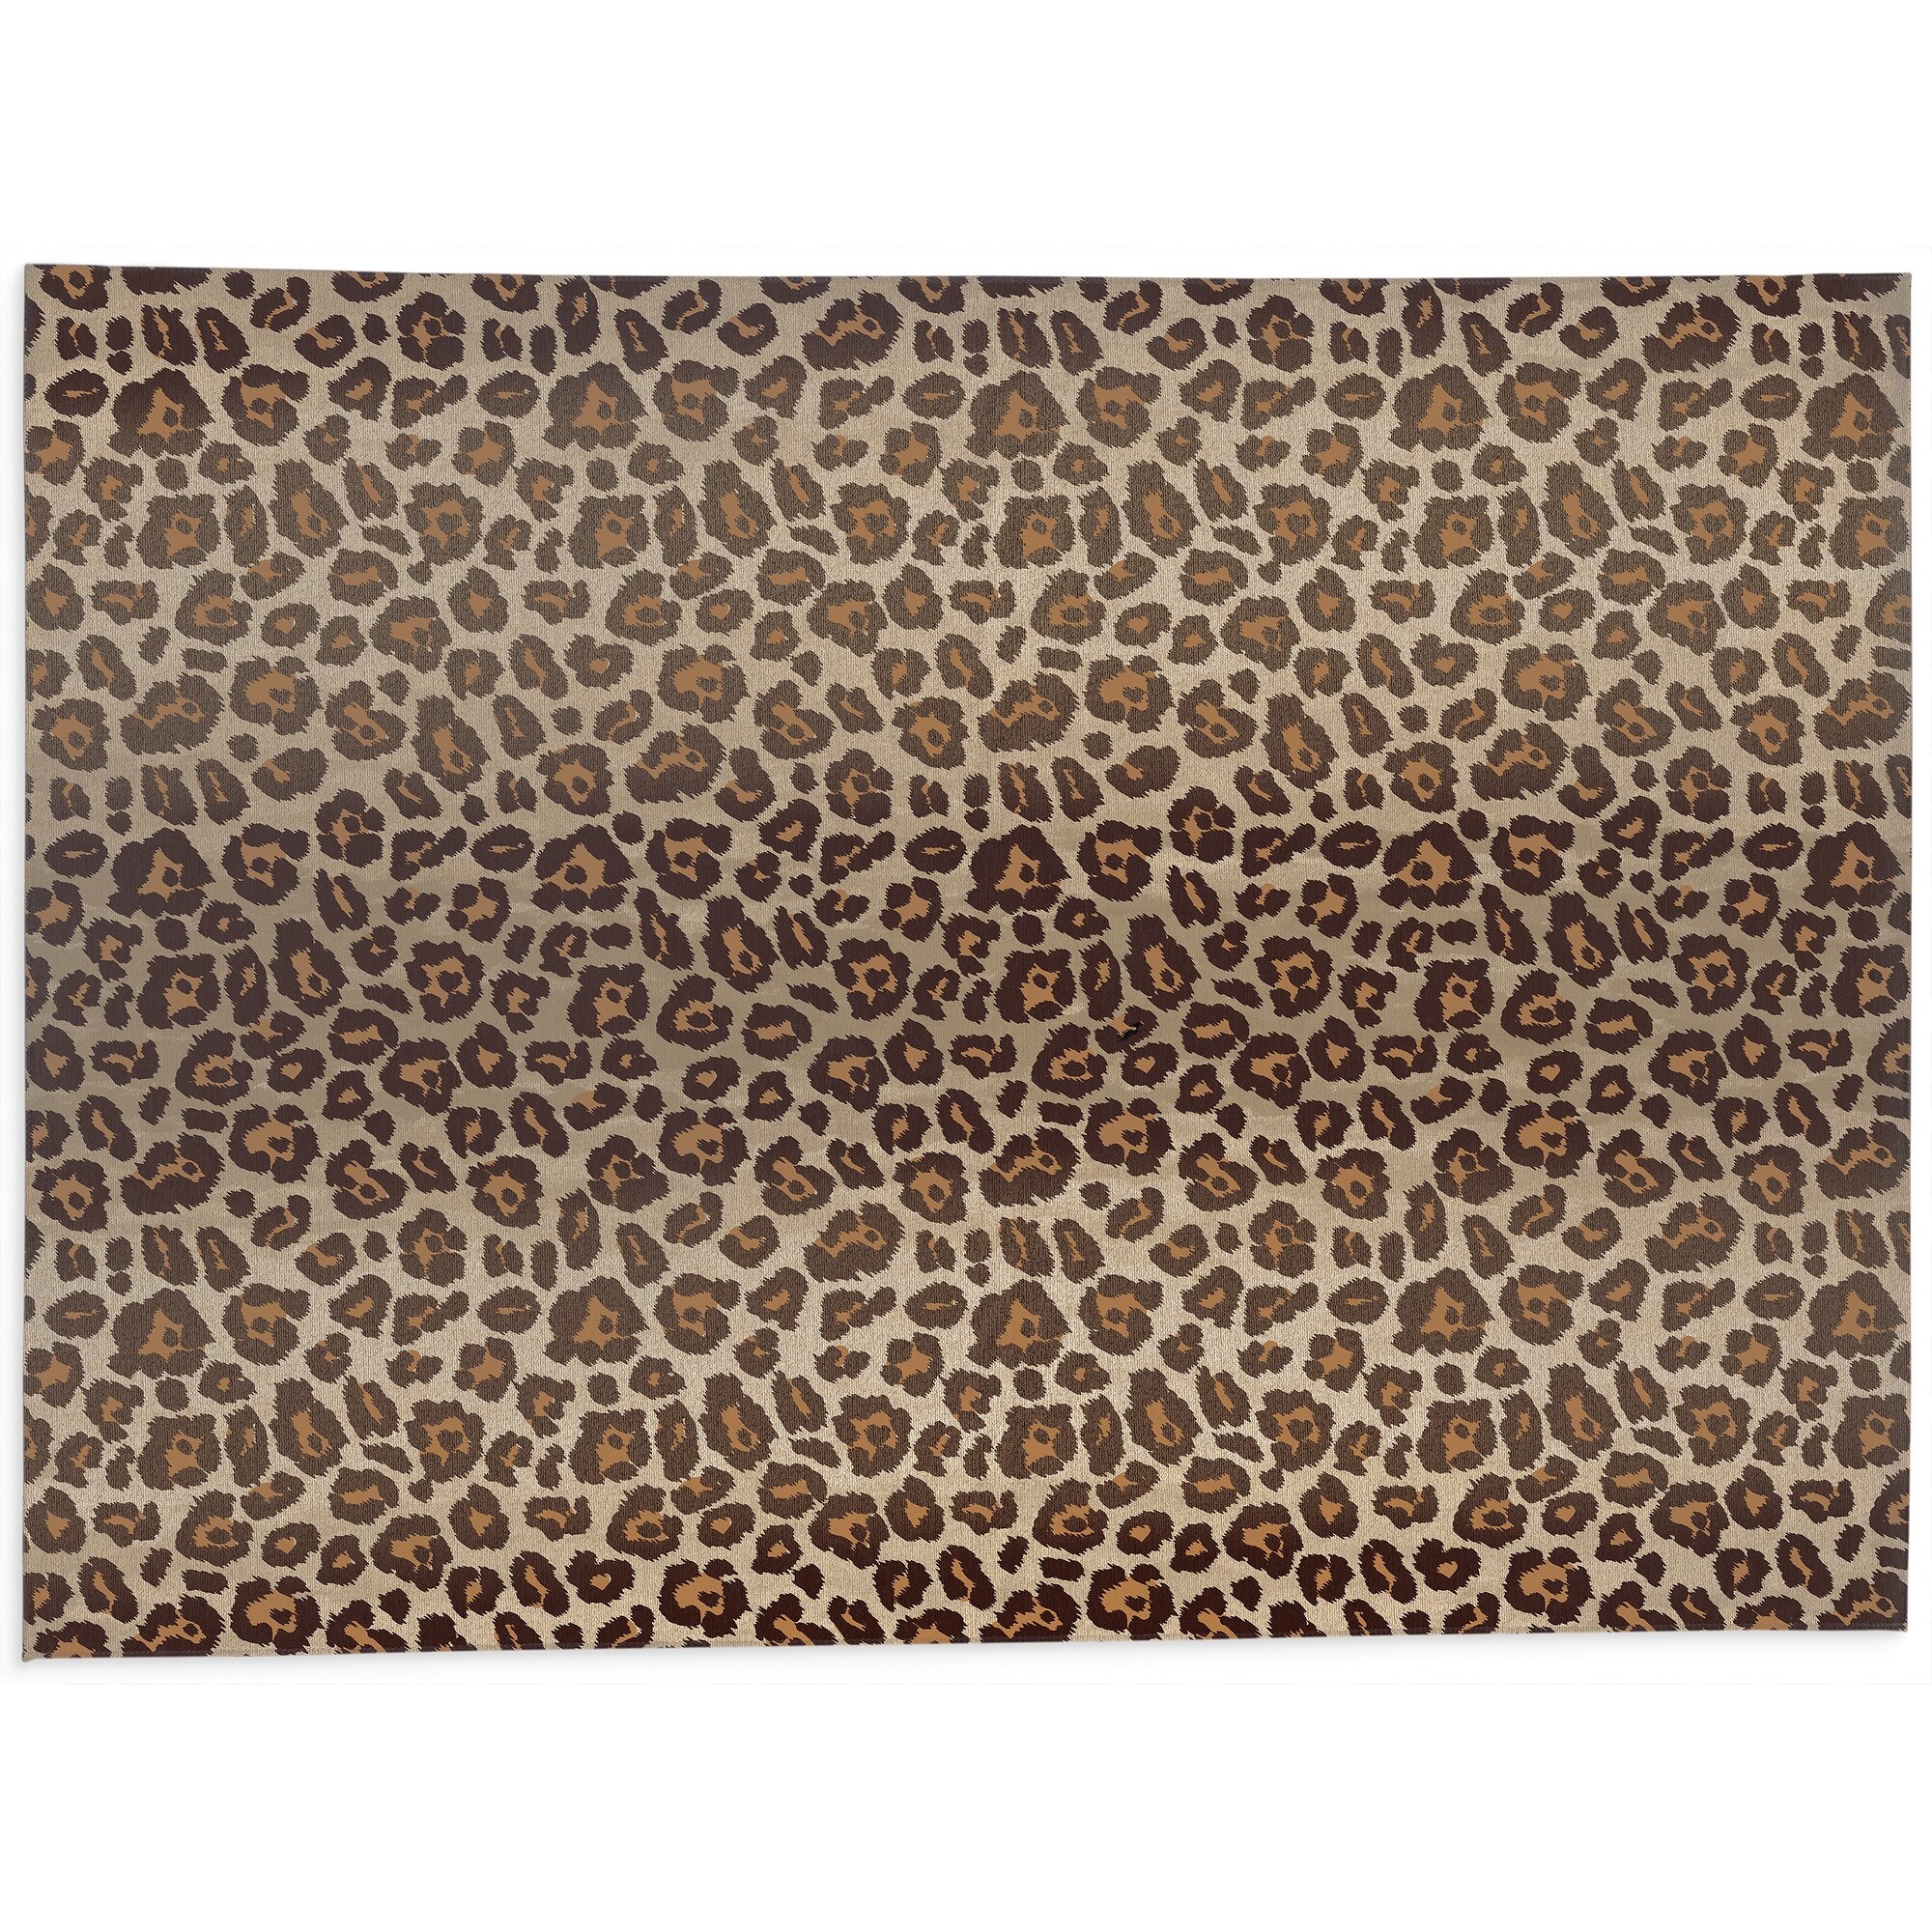 Leopard Cheetah Print Bathroom Rugs Soft Bath Mat Non Slip Absorbent Indoor  Floor Rug Kitchen Mats for Home Bedroom Decor, 31.5x19.5 Inches :  : Home